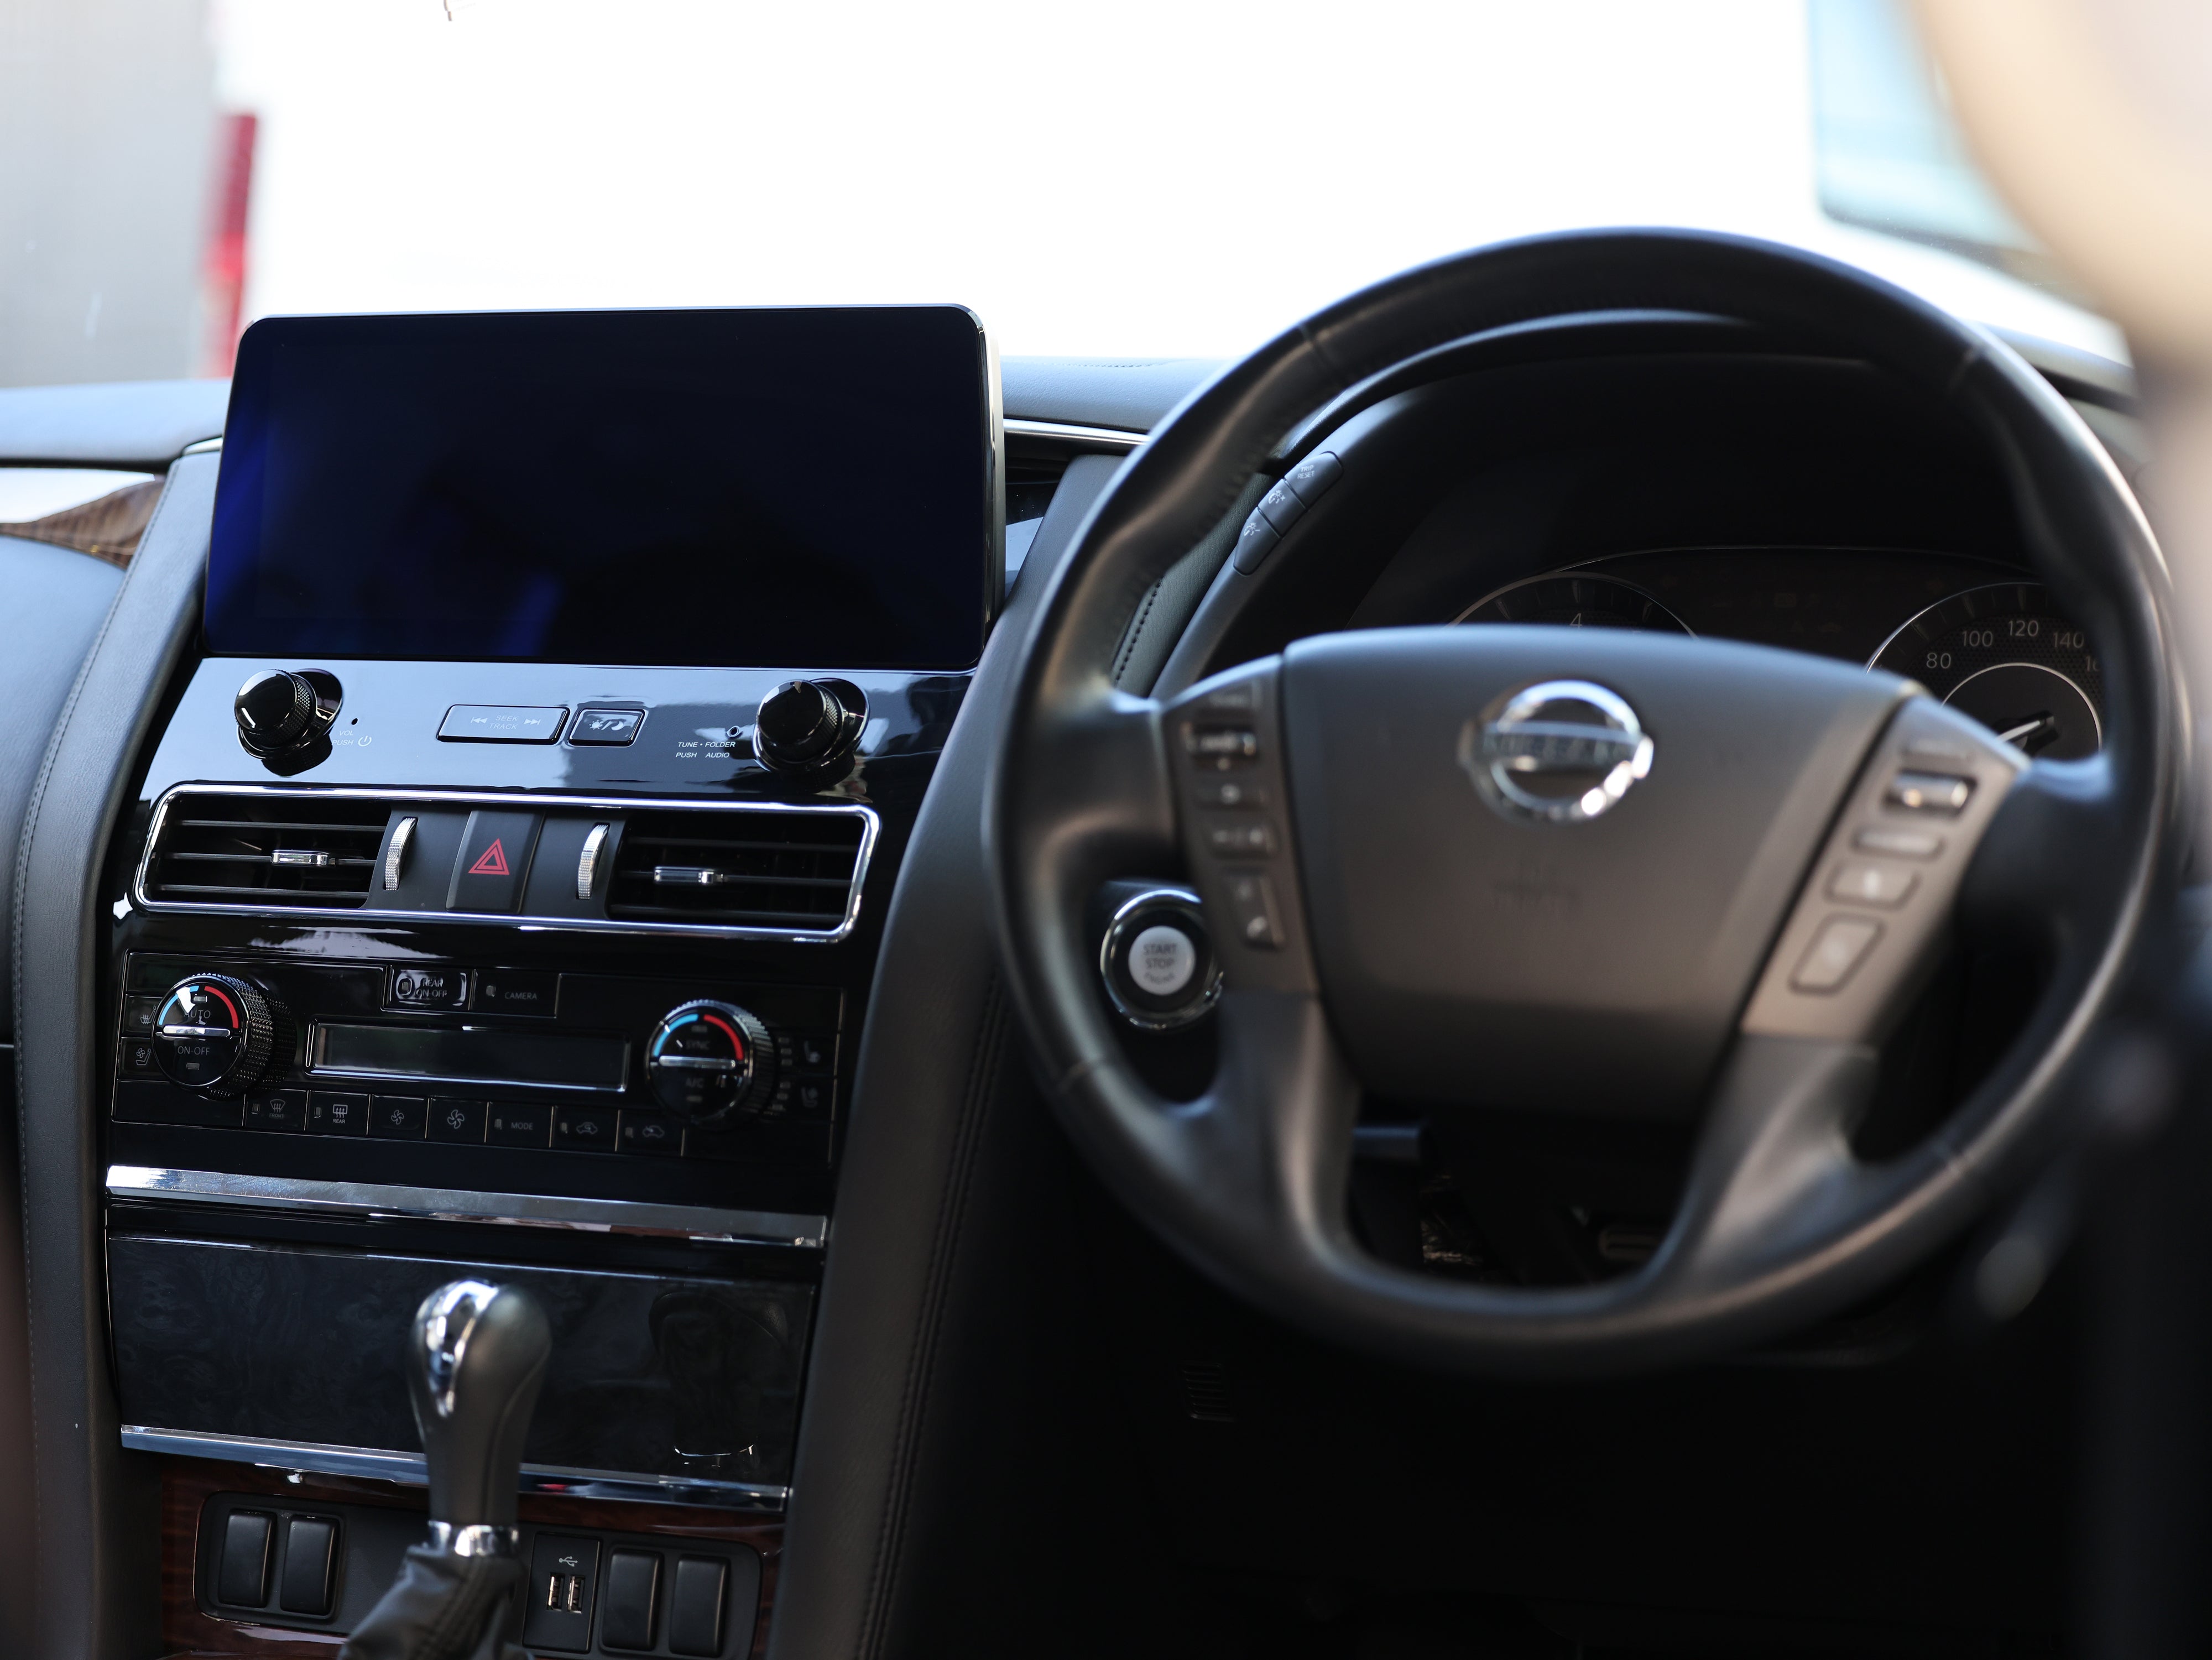 Generation 2023 12.3 Inch Multimedia Android/CarPlay Headunit 8GB+256GB to suit Nissan Y62 Patrol